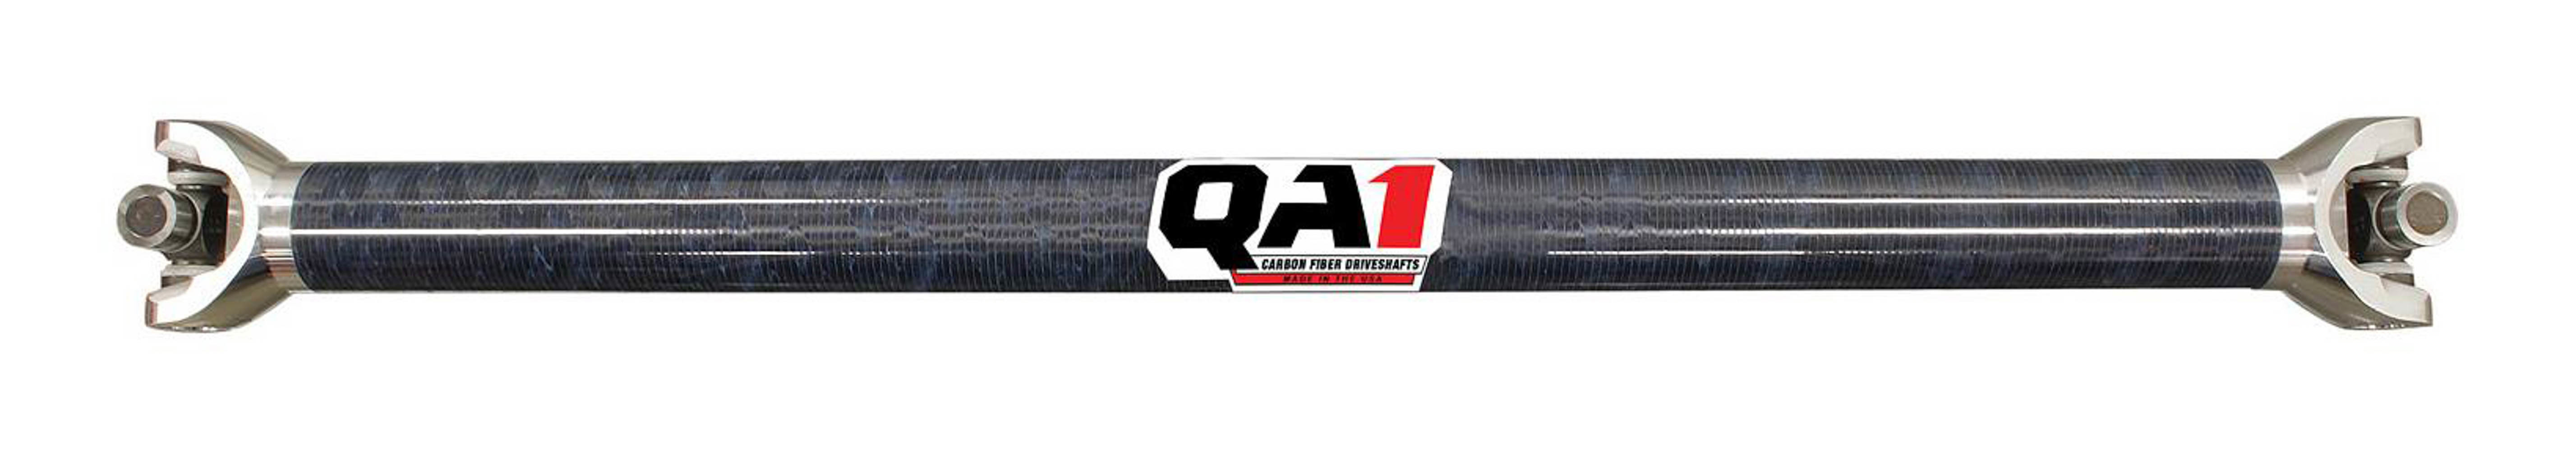 QA1 JJ-11219 Drive Shaft, Dirt Late Model, 37 in Long, 2.25 in OD, 1310 U-Joints, Carbon Fiber, Universal, Each